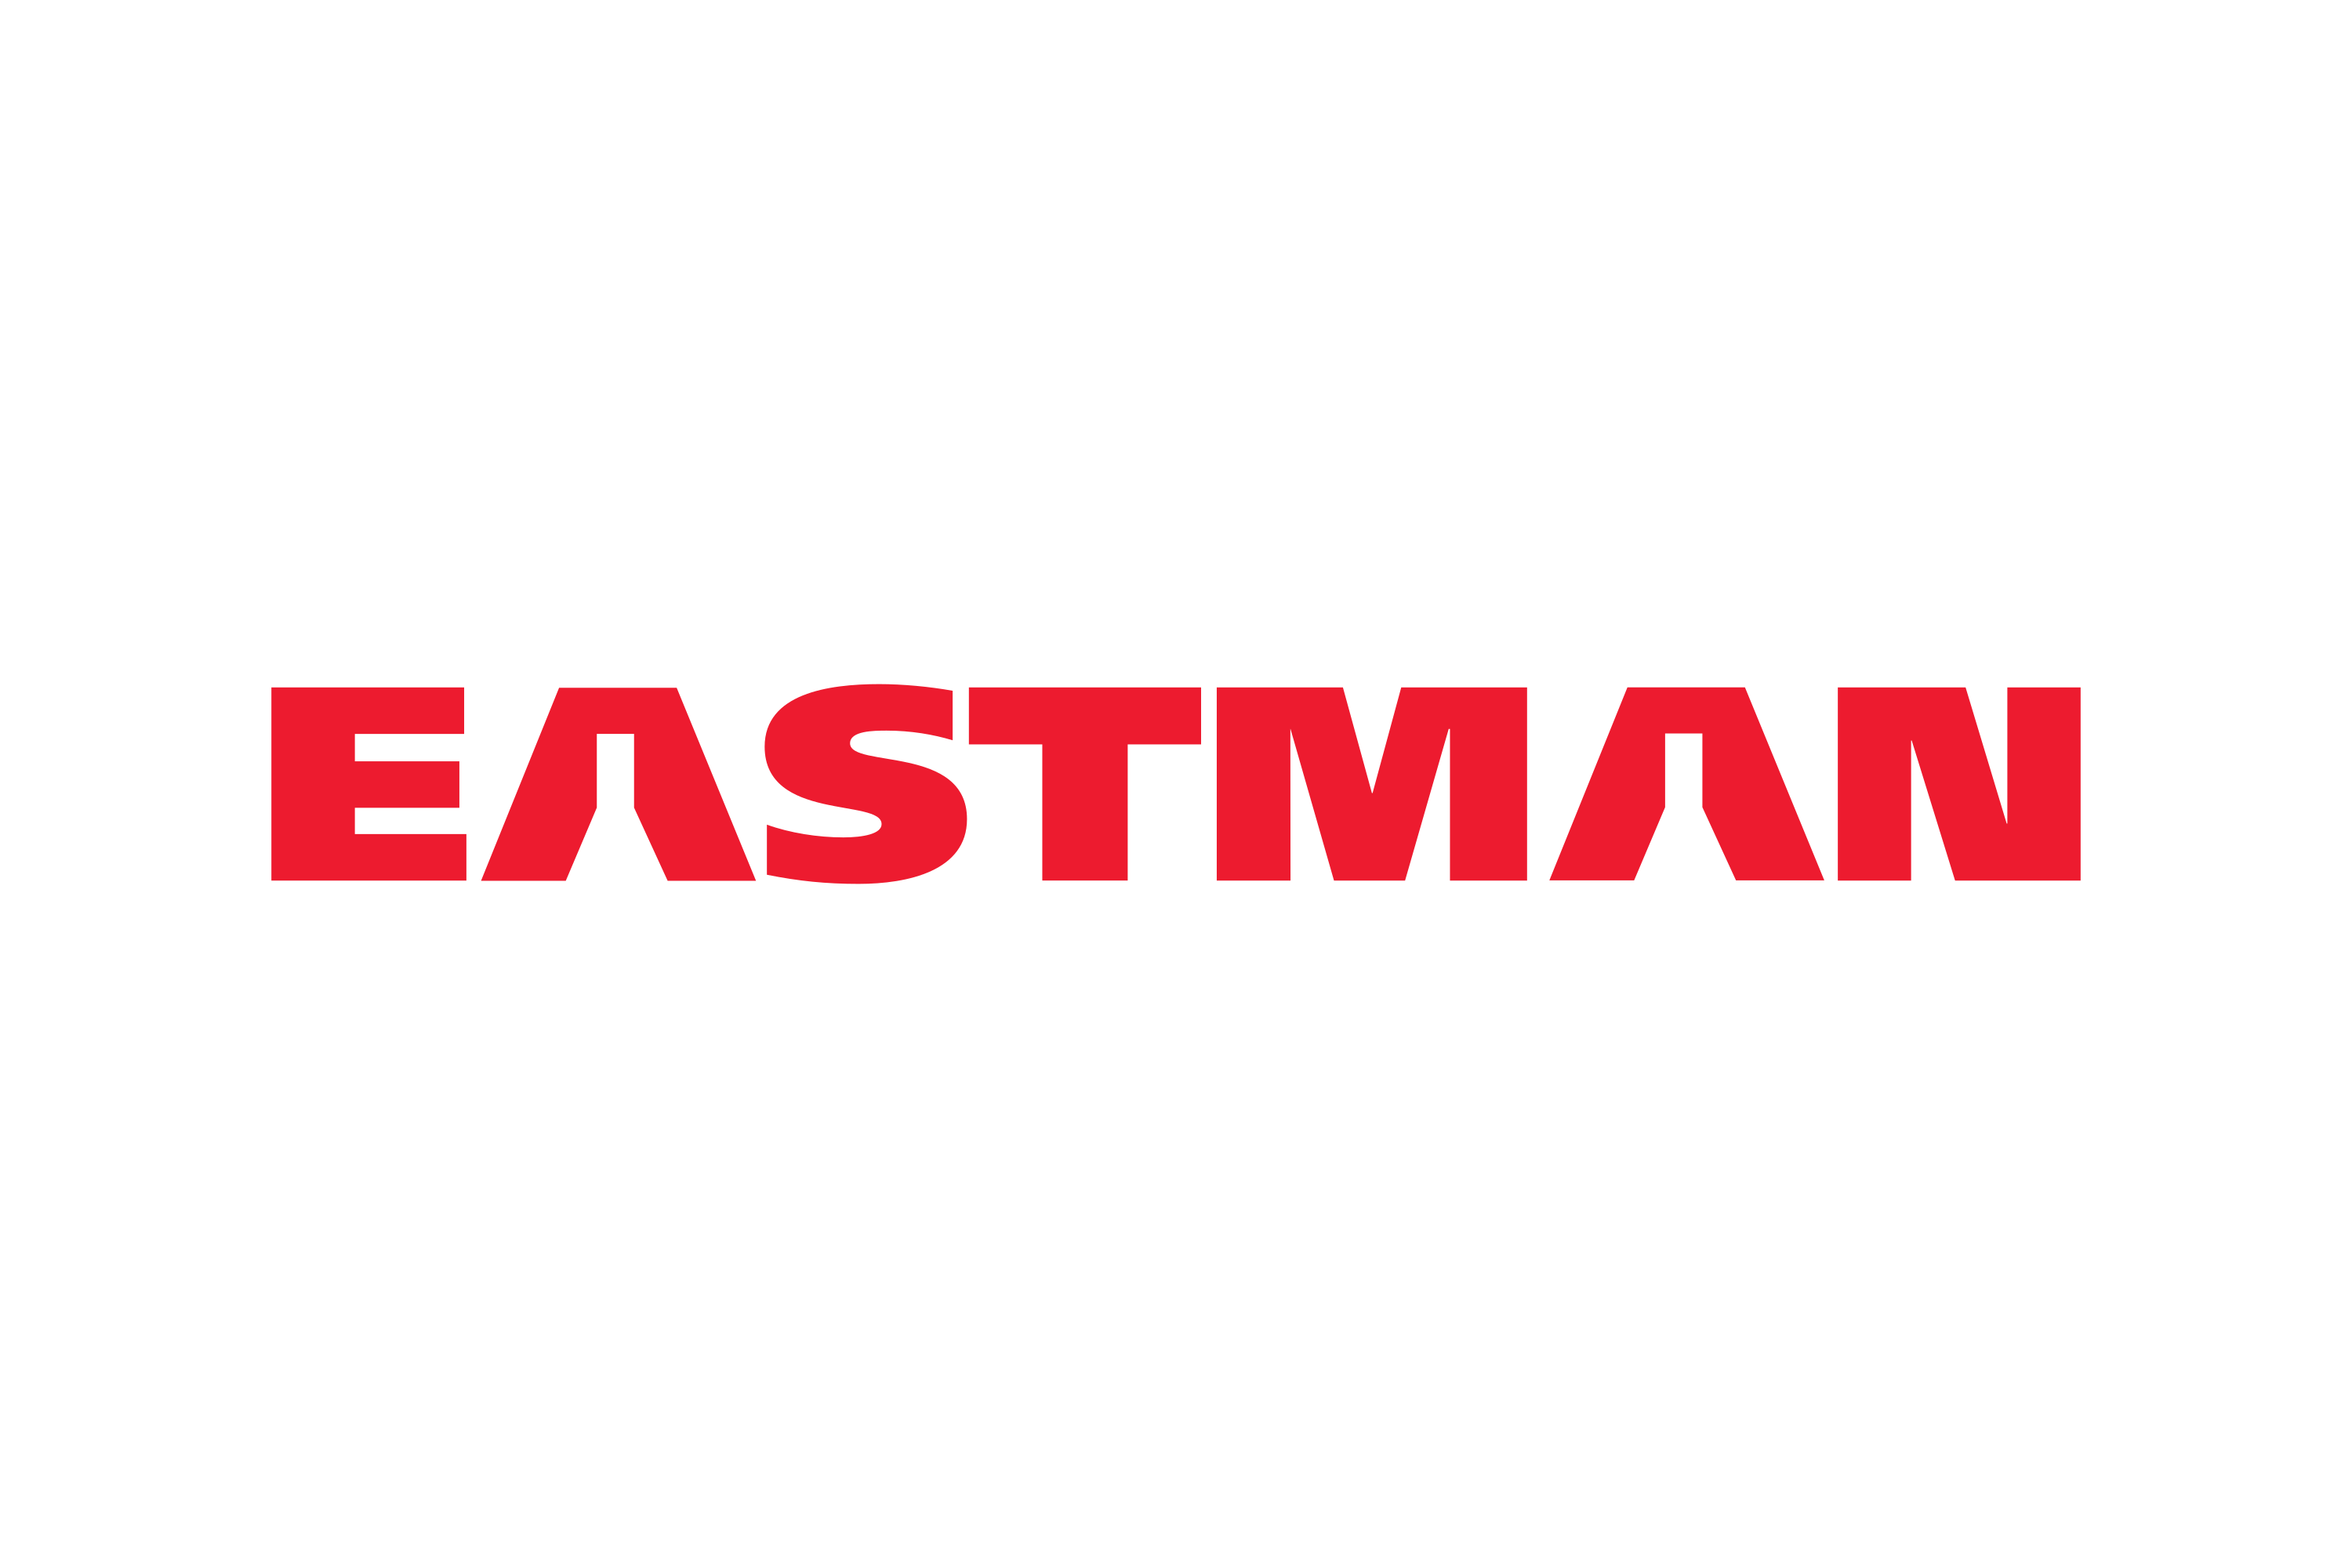 eastman logo